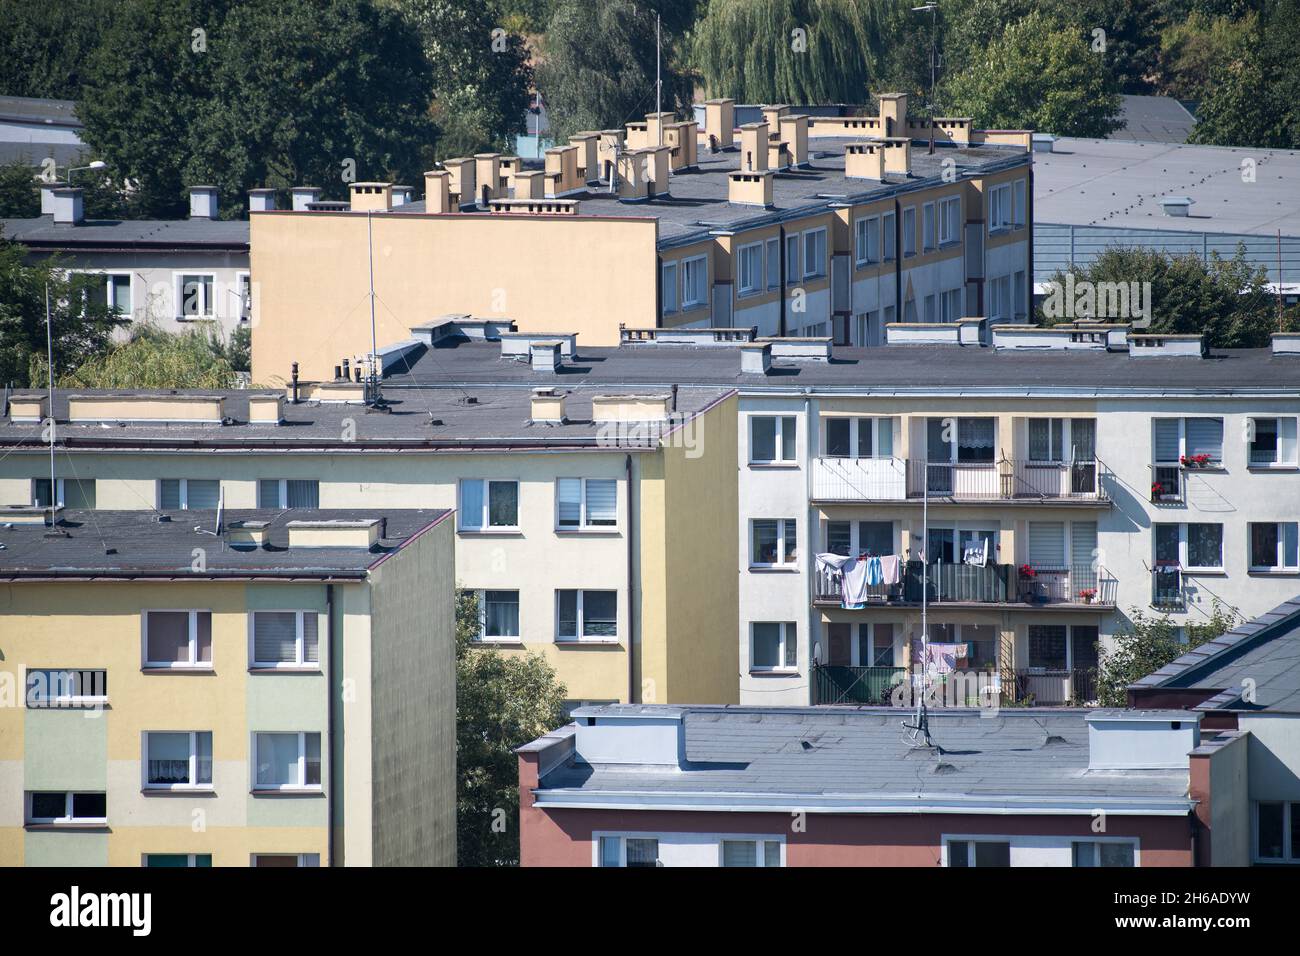 Communist era apartment buildings in Czluchow, Poland. September 9th 2021 © Wojciech Strozyk / Alamy Stock Photo *** Local Caption *** Stock Photo